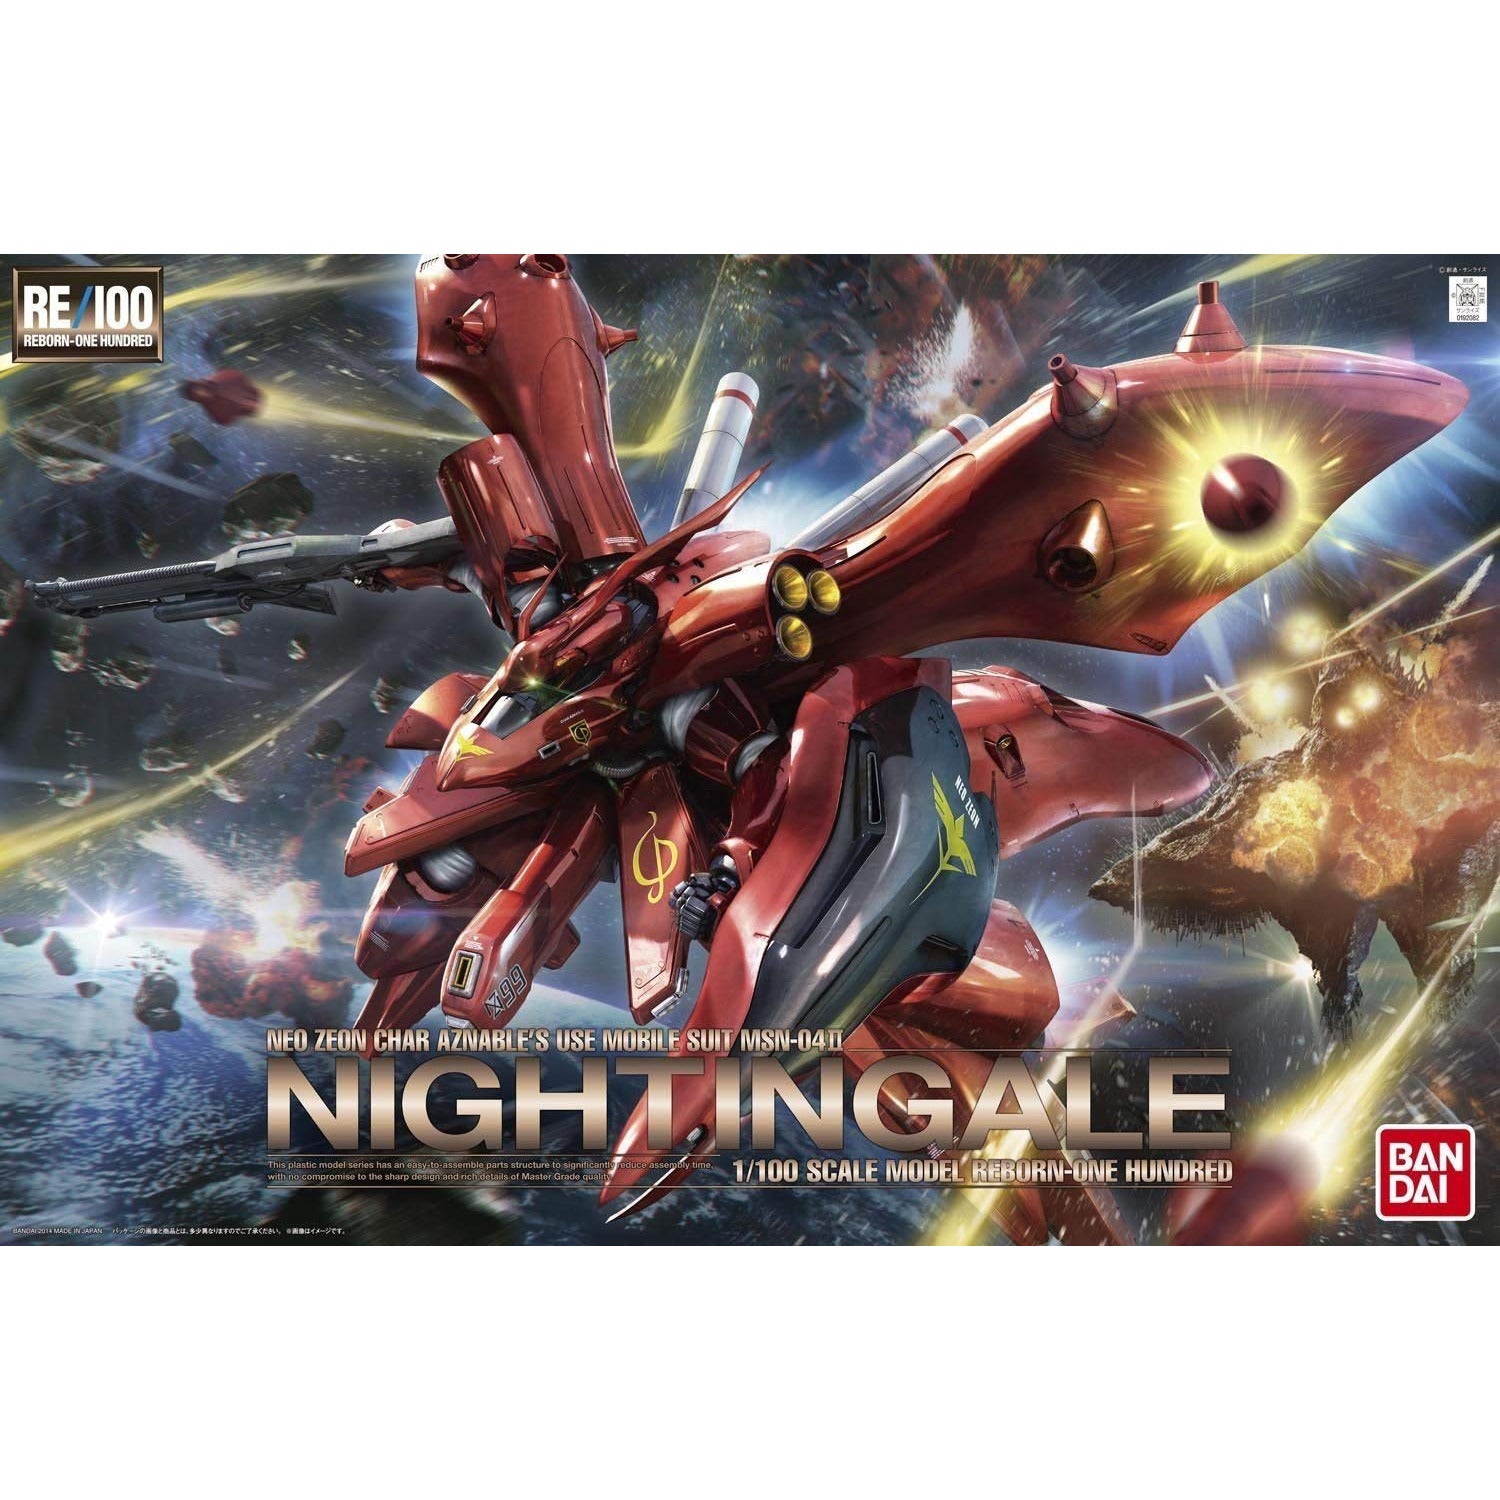 RE/100 1/100 MSN-04 II Nightingale #5065578 by Bandai